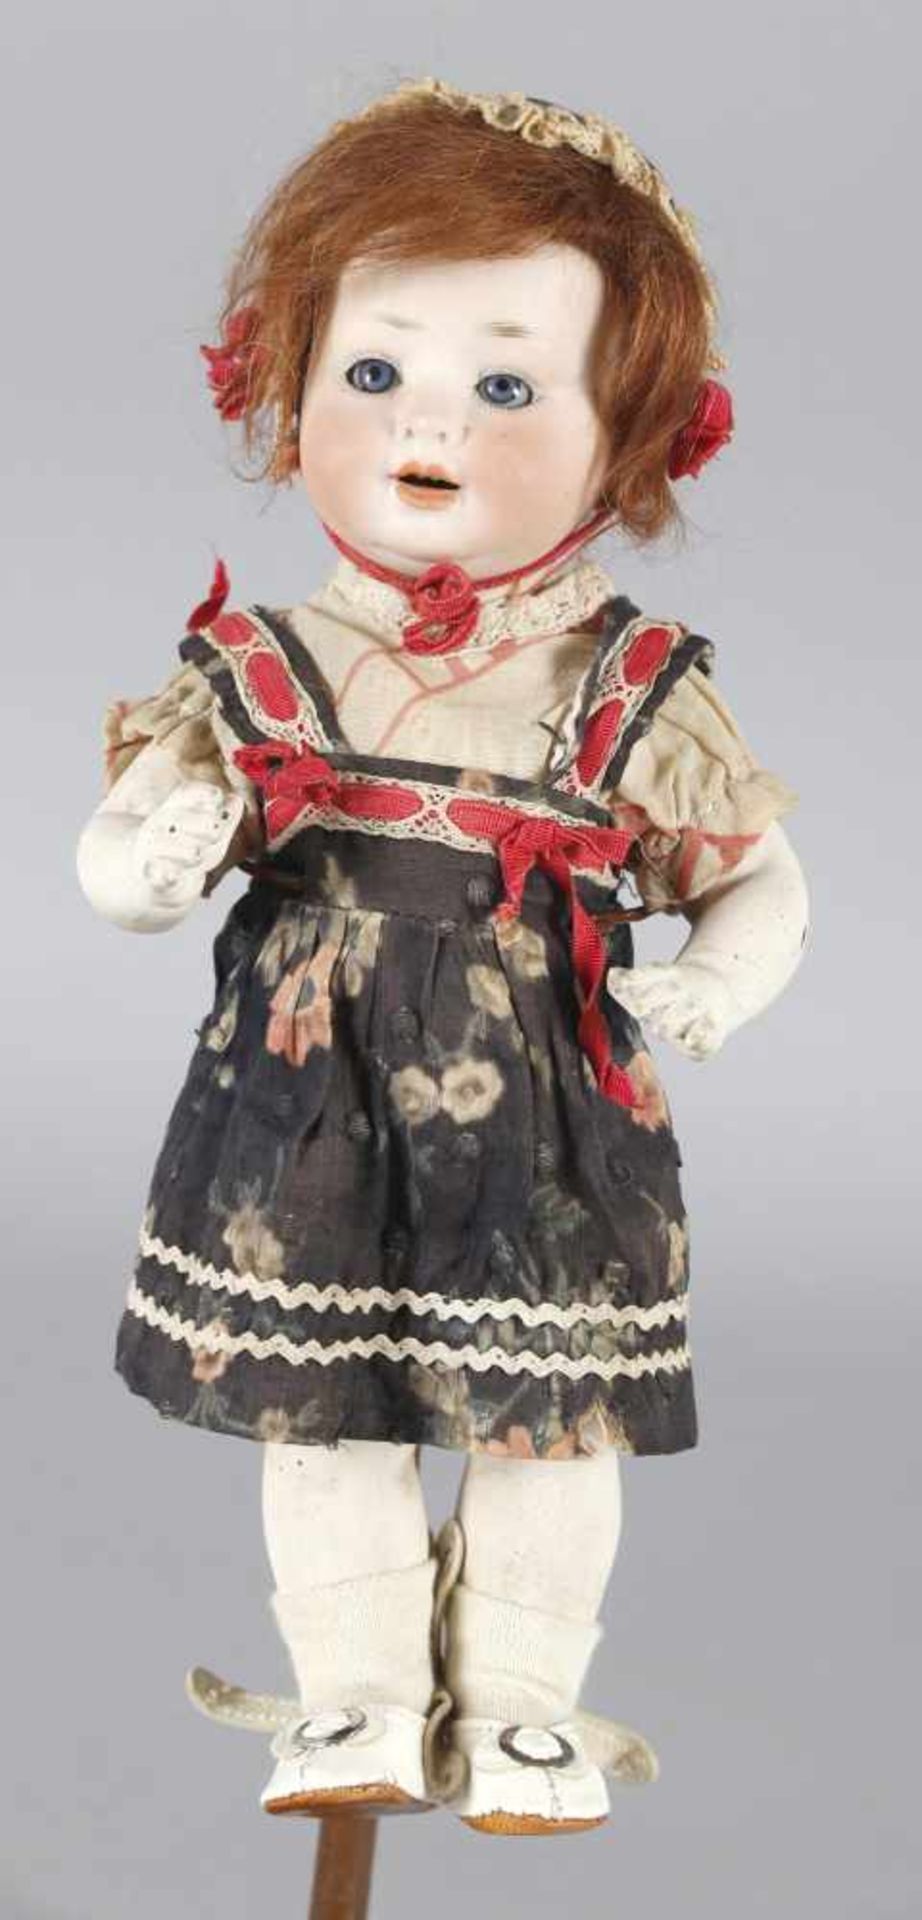 Puppe, Porzellanfabrik Mengersgereuth, Thüringen, um 1920